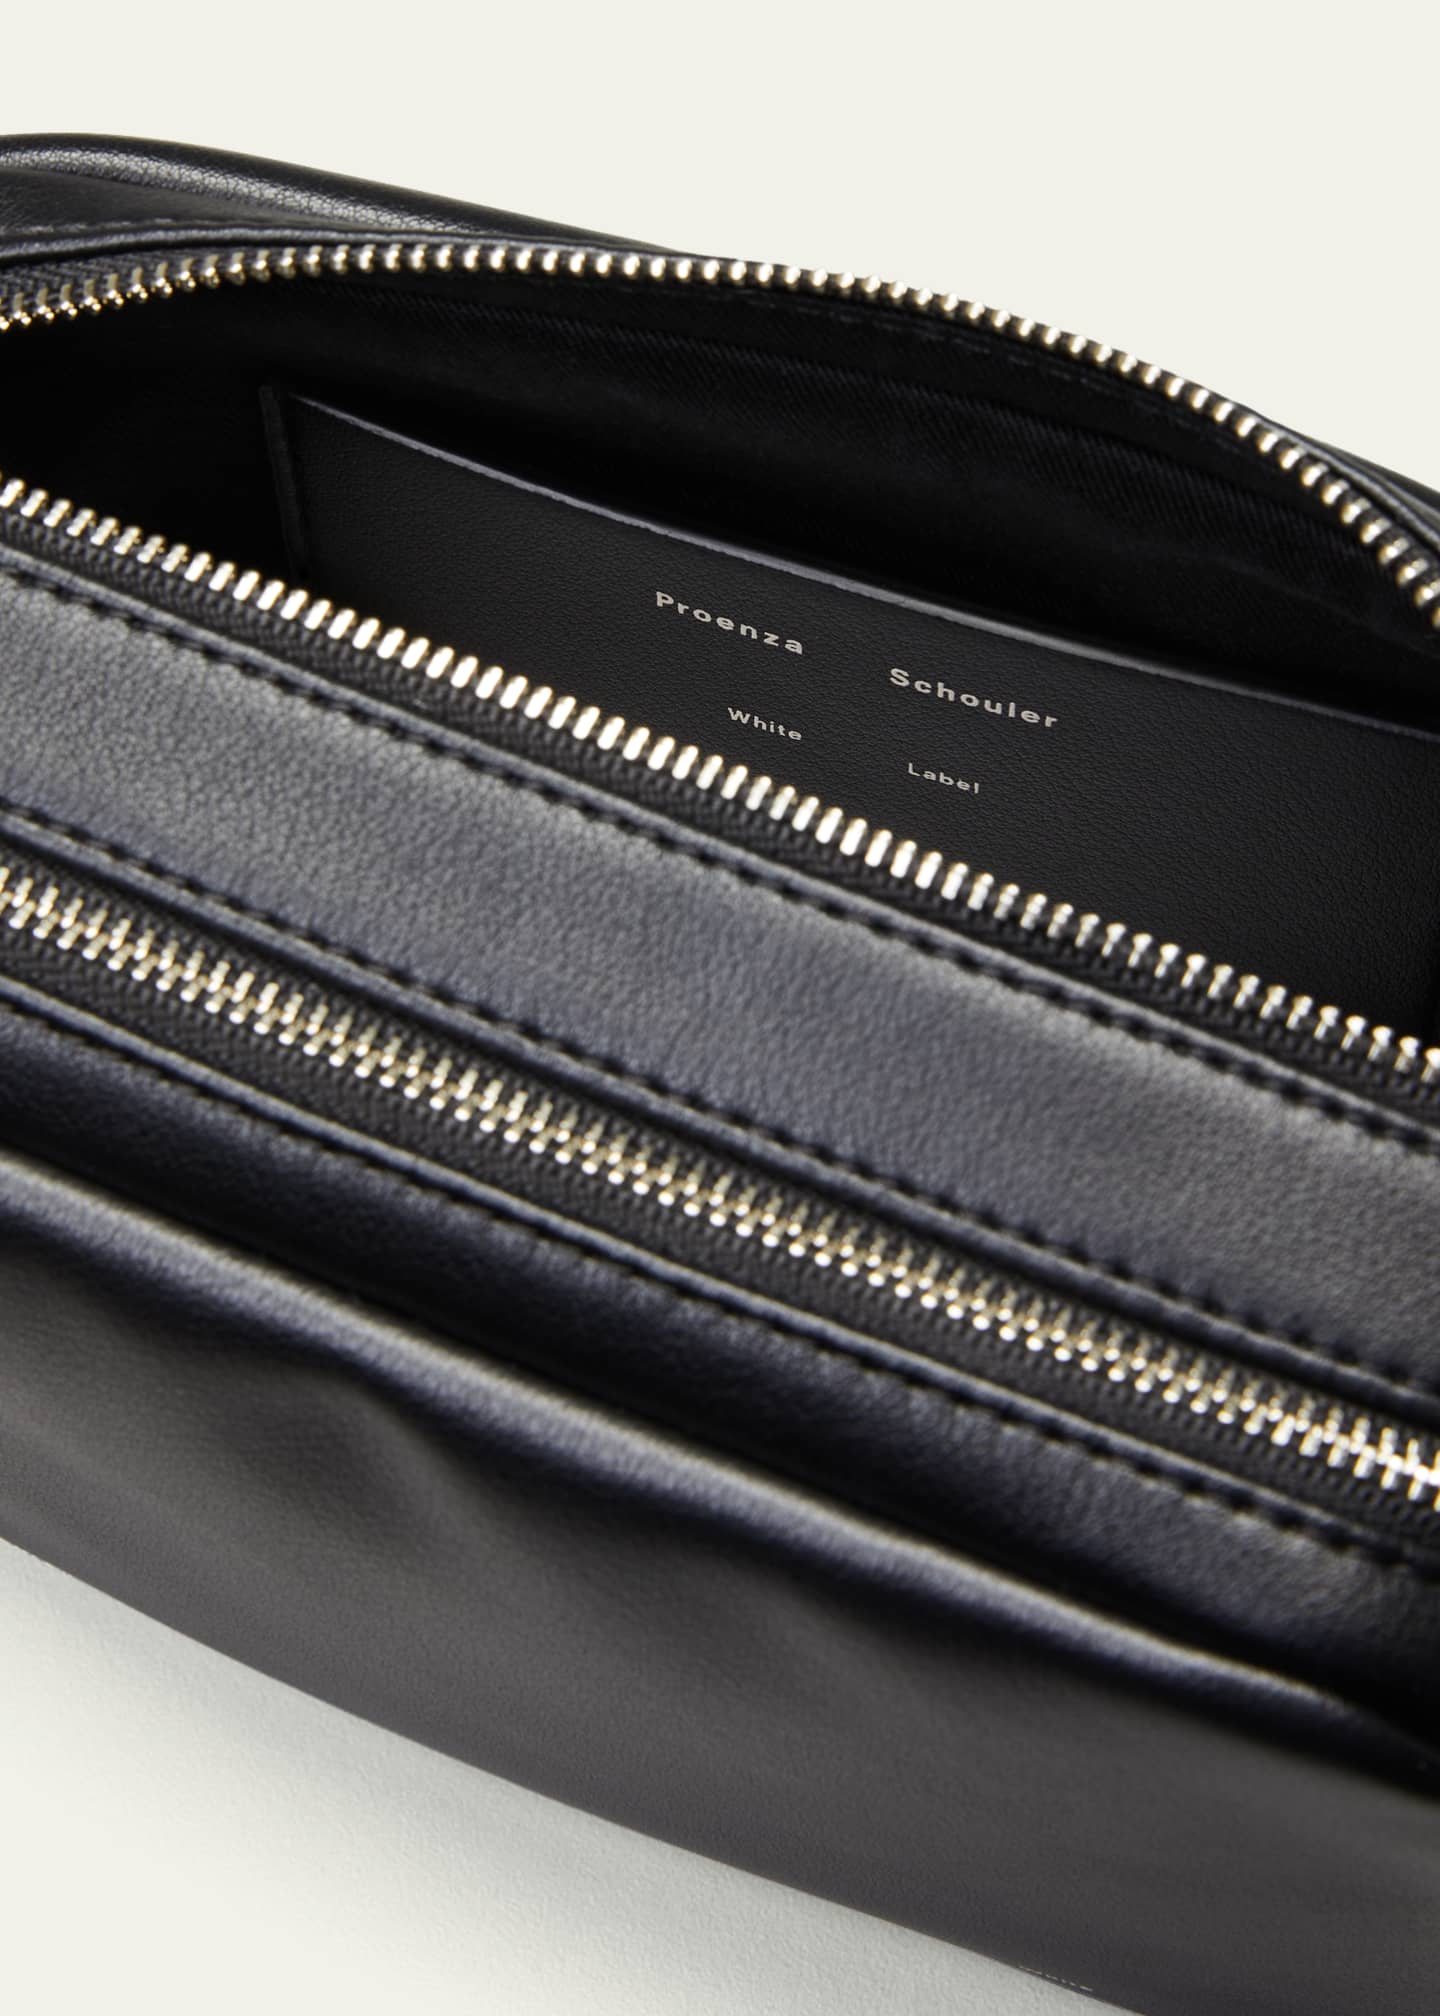 Proenza Schouler White Label Watts Leather Camera Shoulder Bag Black